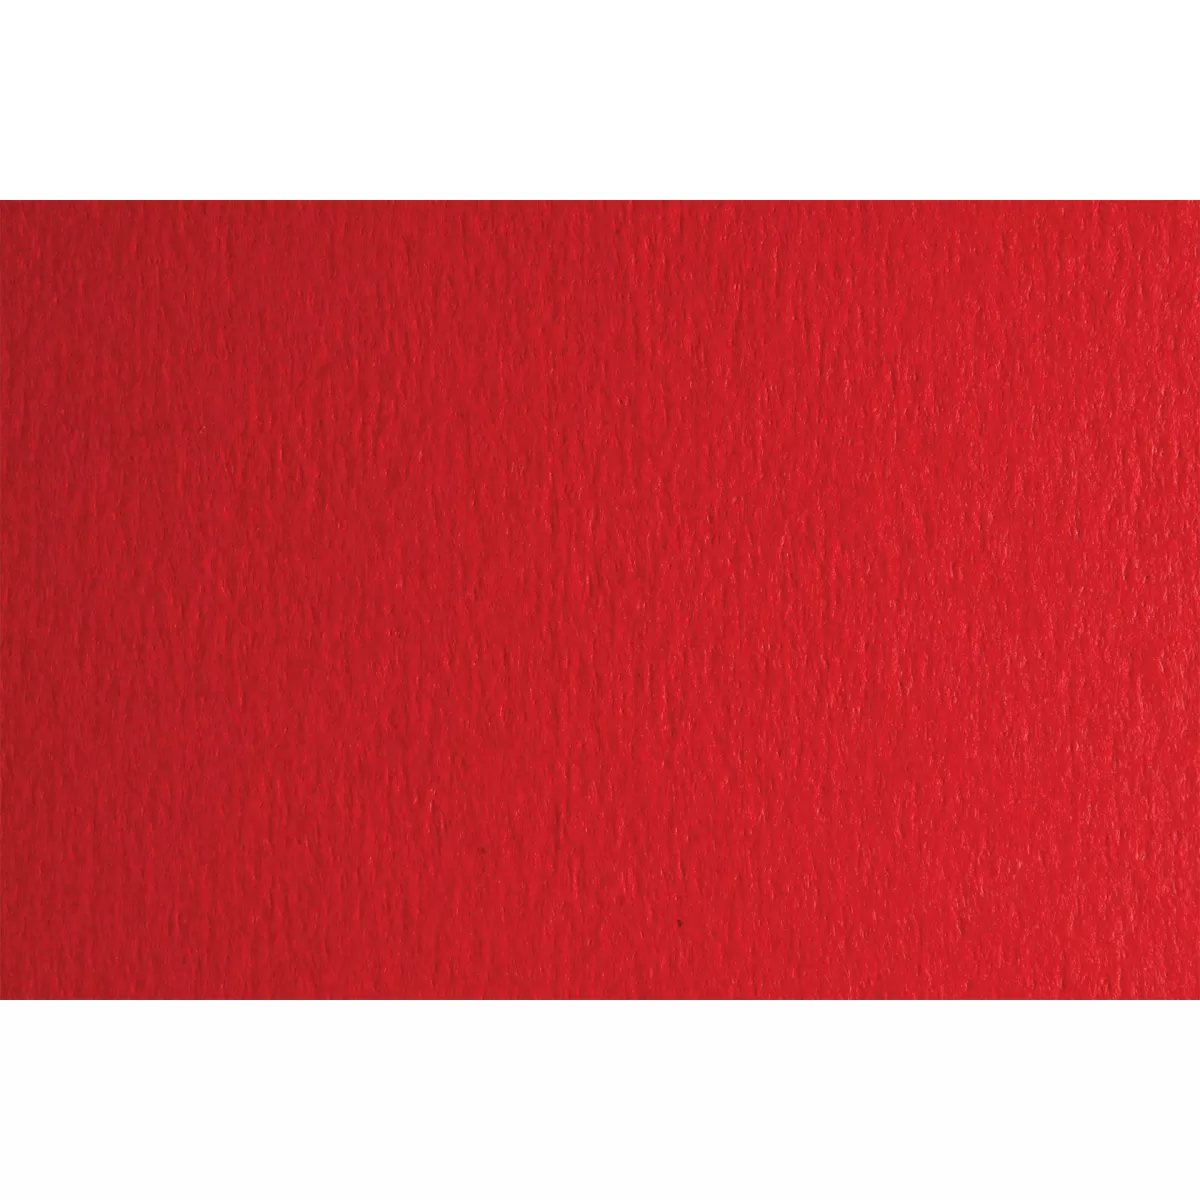 Fabriano Картон Colore, 50 x 70 cm, 140 g/m2, № 229, червен